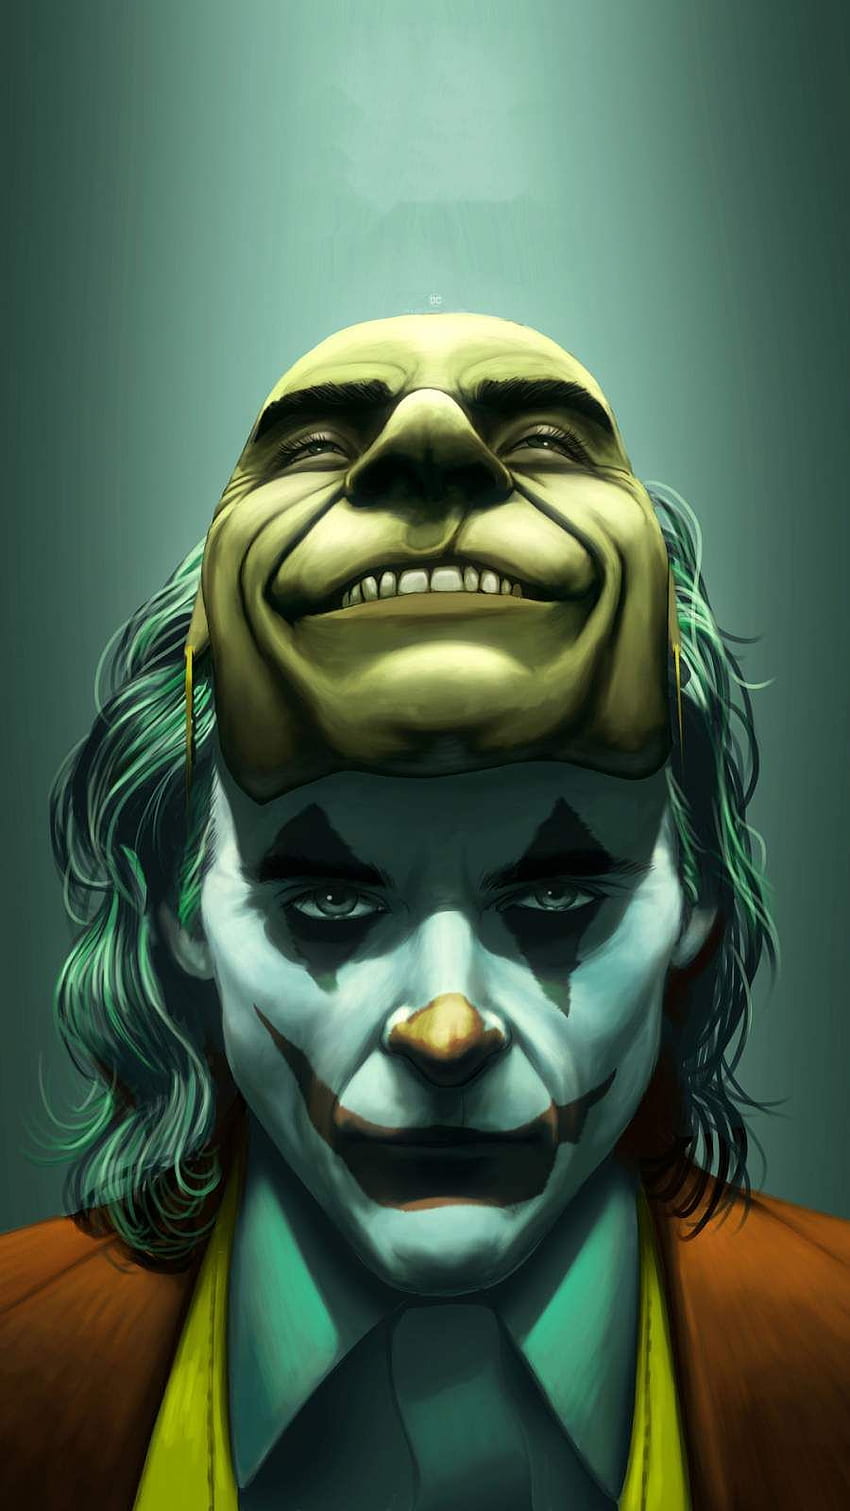 https://e0.pxfuel.com/wallpapers/179/201/desktop-wallpaper-joker-faces-iphone-joker-face-joker-artwork-joker-pics-double-face.jpg